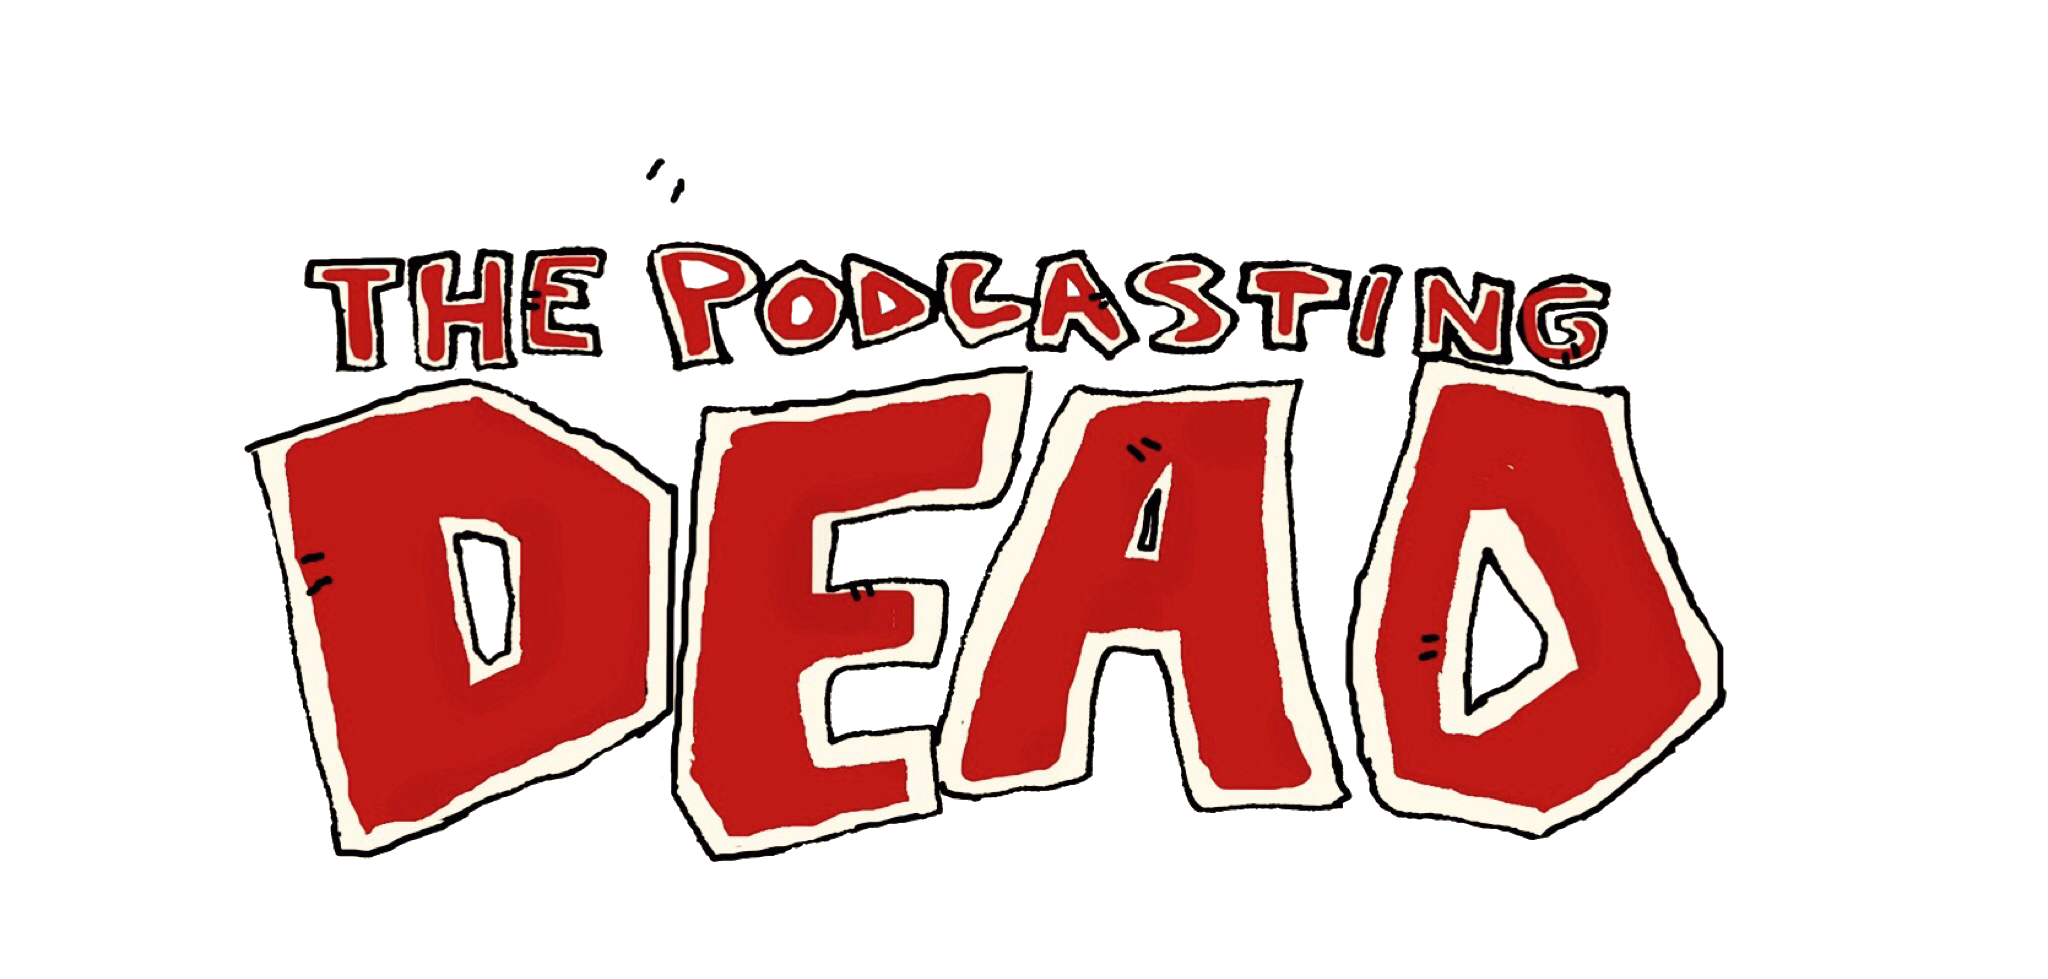 Fear The Podcasting Dead: Season 4 Episode 7 